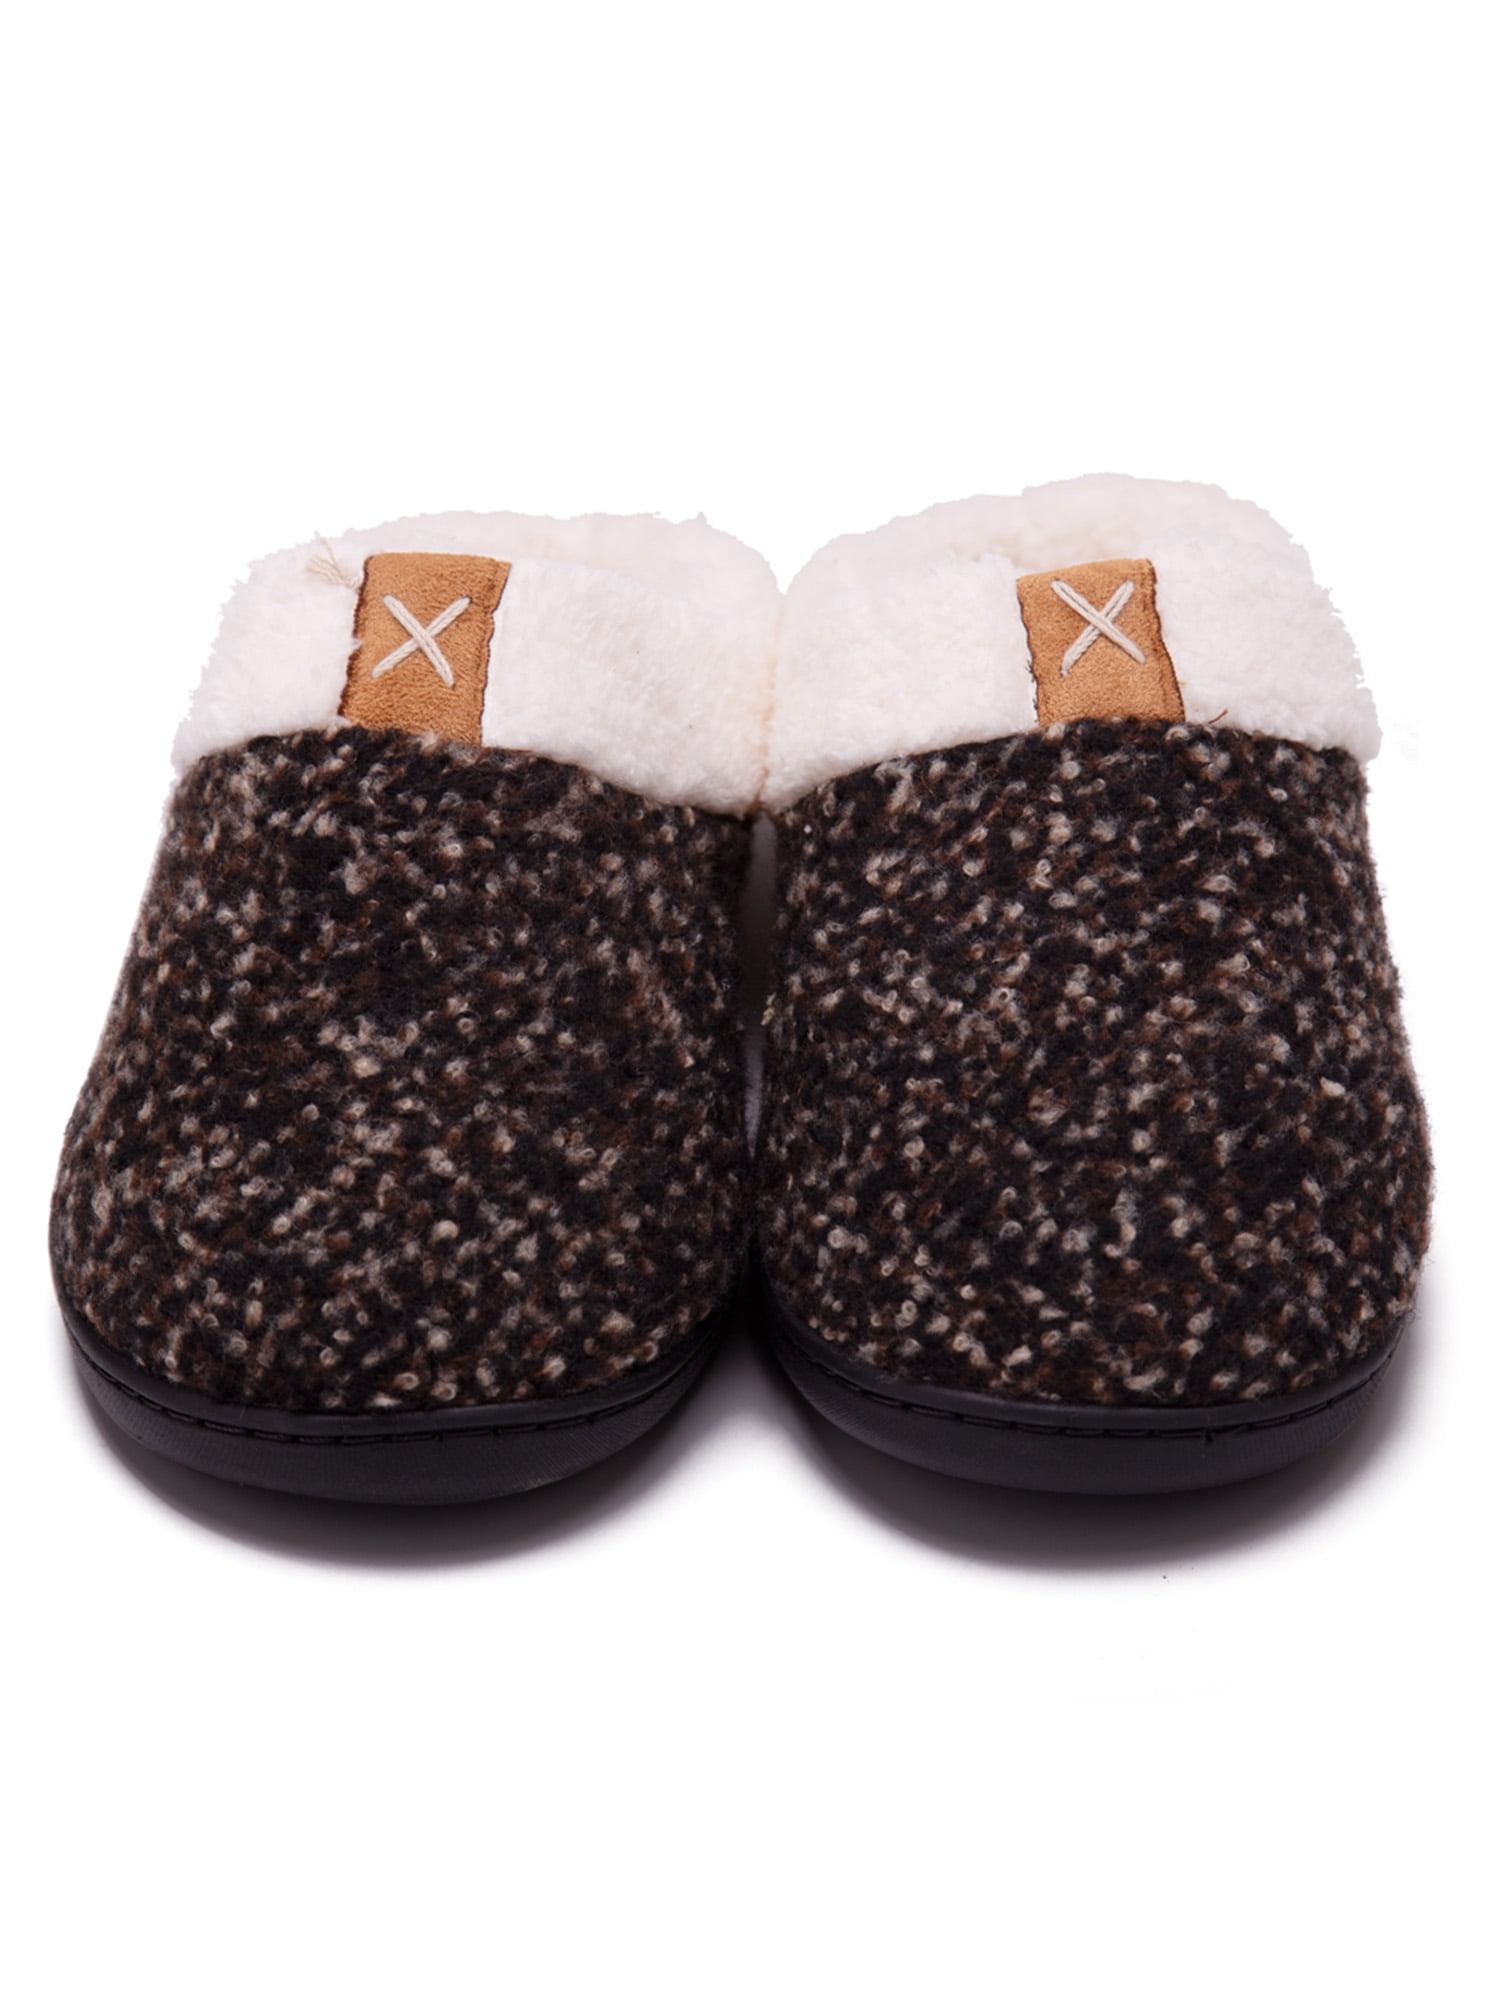 incarpo Slippers Mens Memory Foam Slippers Wool Lining Non-Slip Indoor Outdoor Slippers 